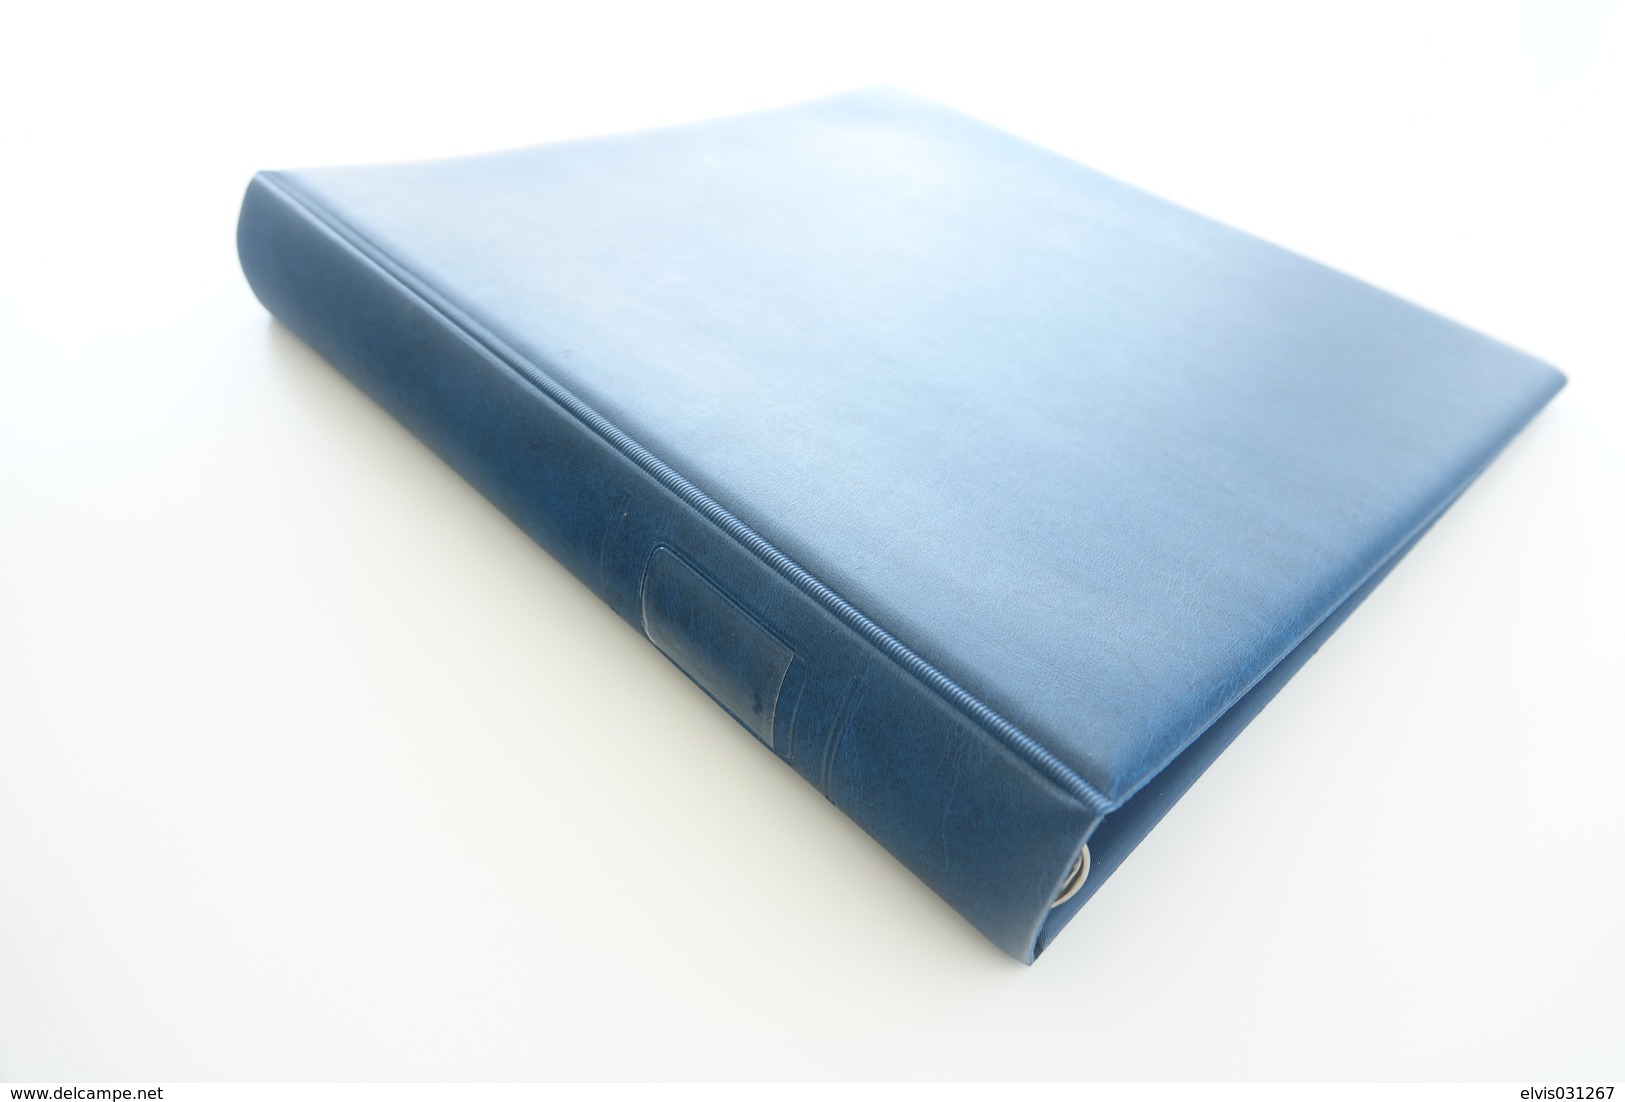 Israel Album - Lindner Album, Blue, 18 Rings, Format 5x30x32cm - Groß, Grund Weiß